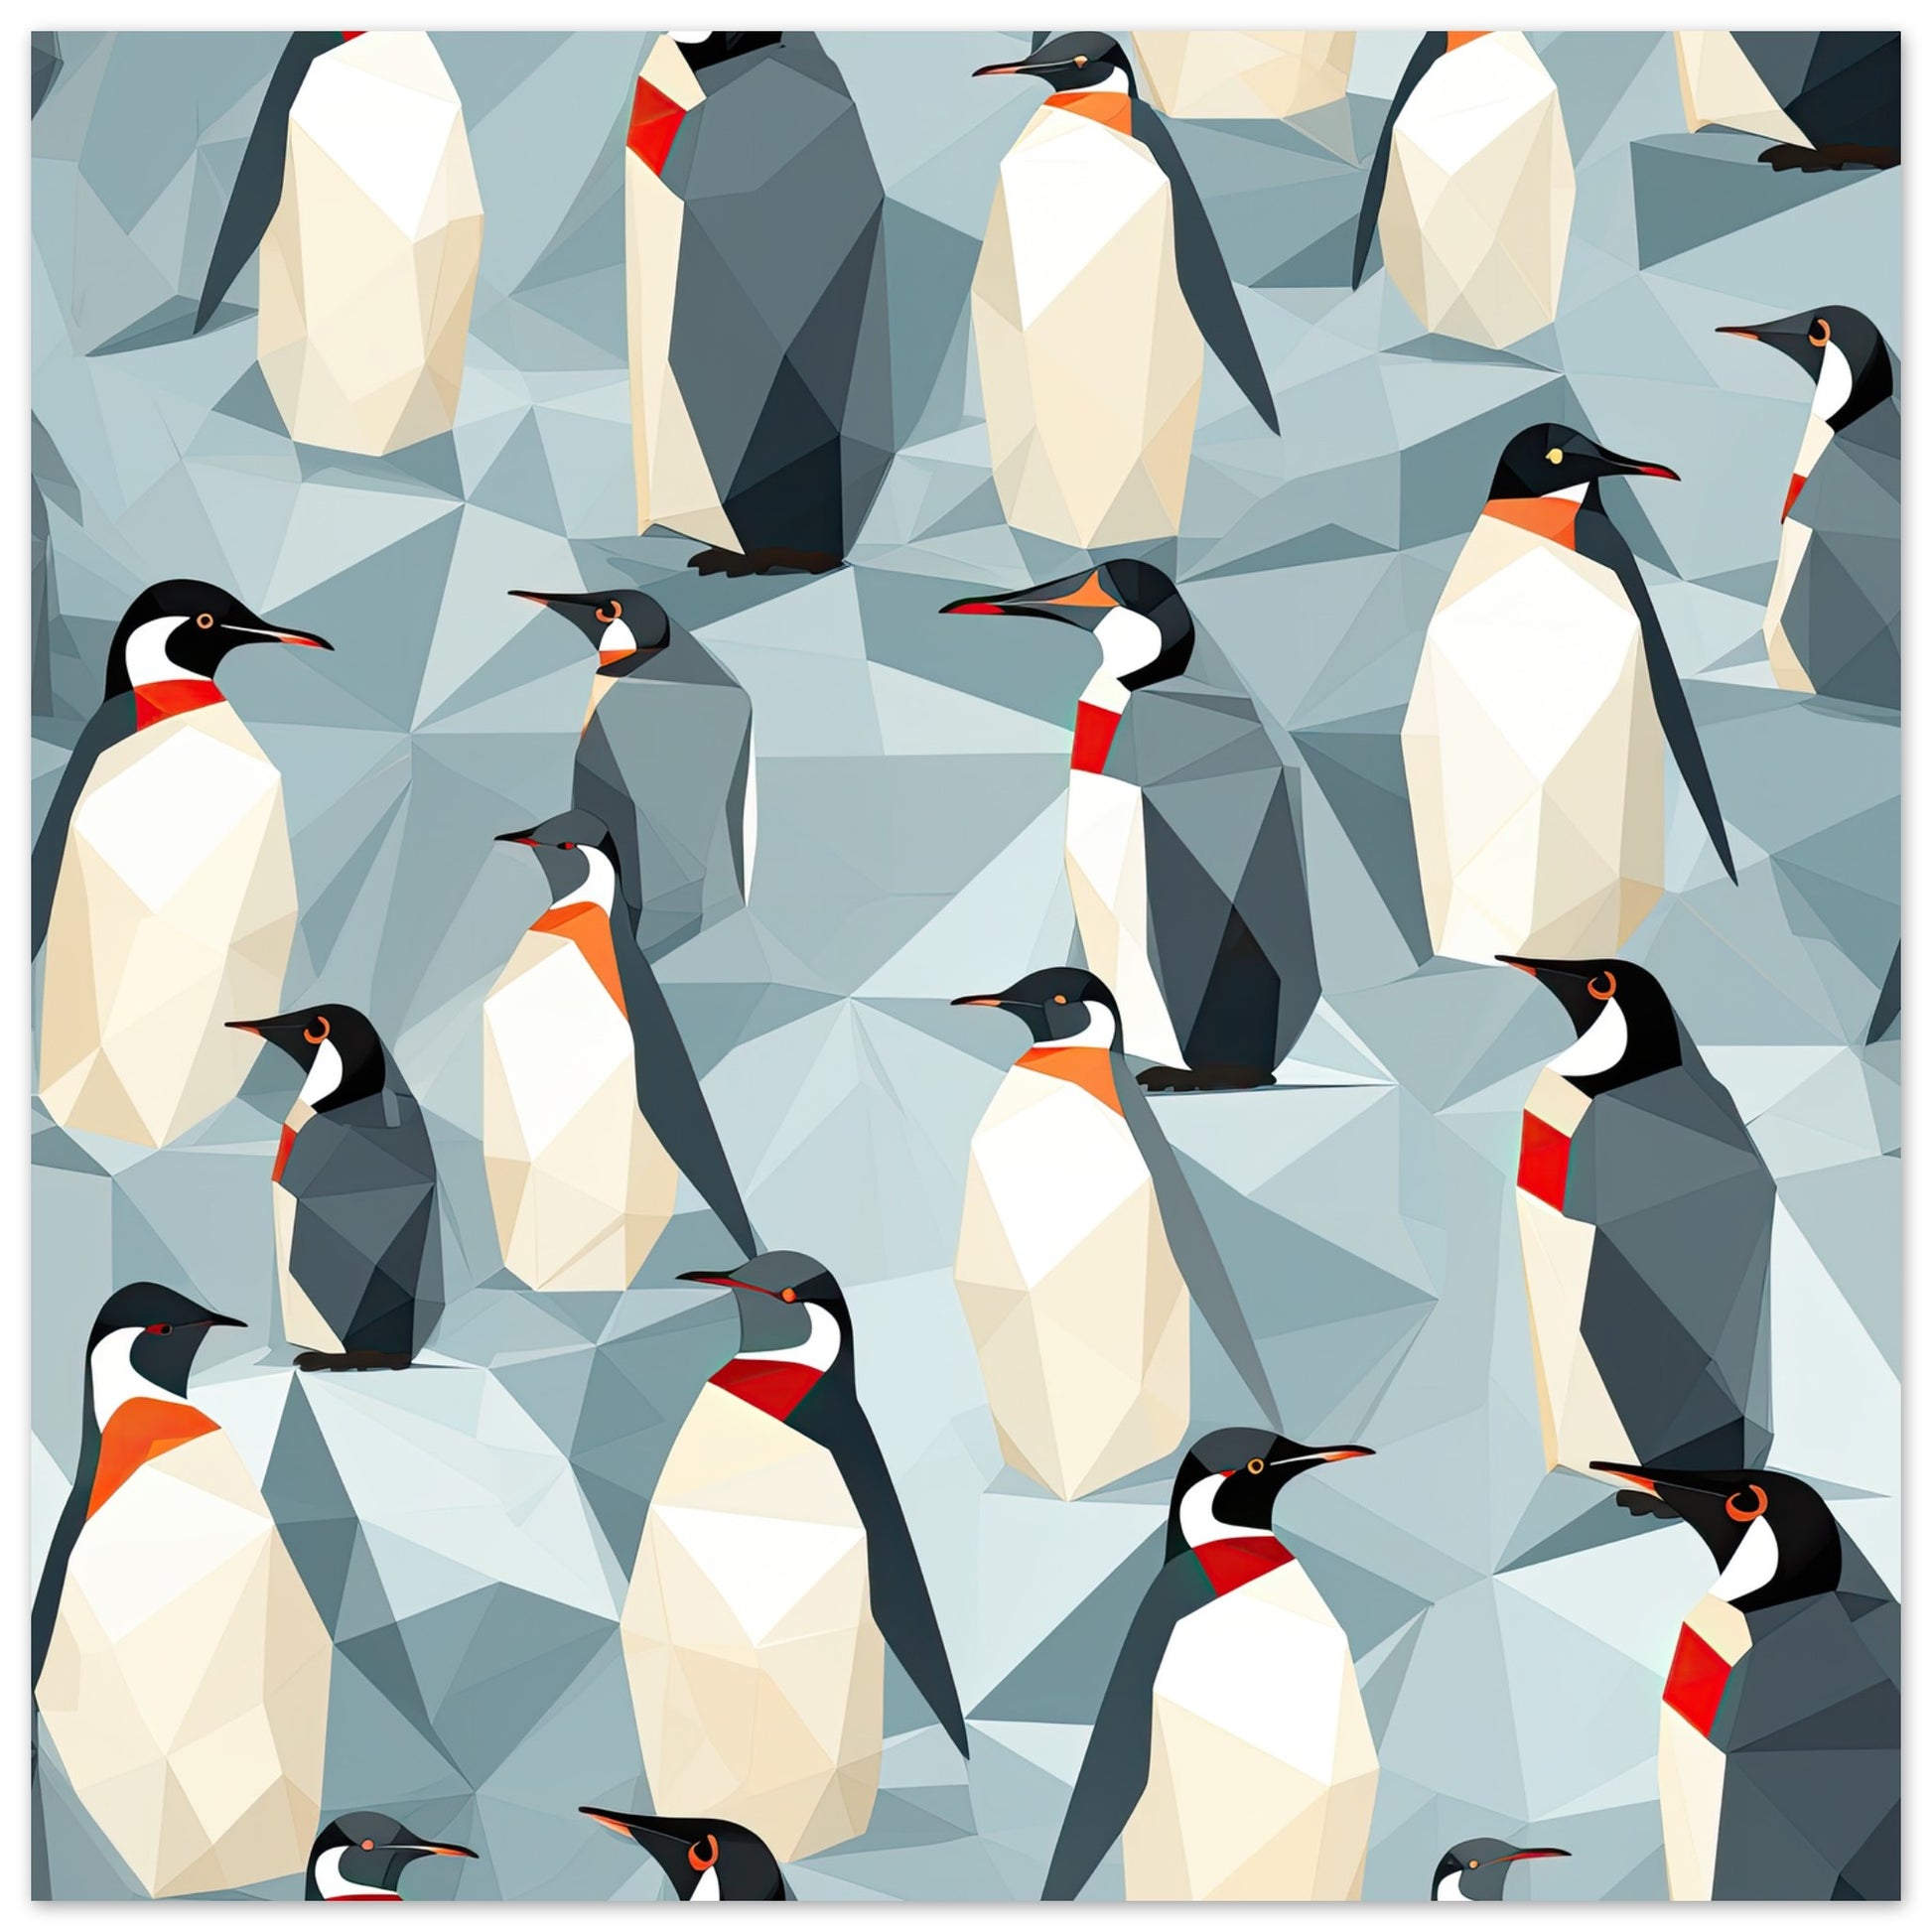 Penguin Convention Artwork AllStyleArt Matte Poster 50x50 cm / 20x20" 